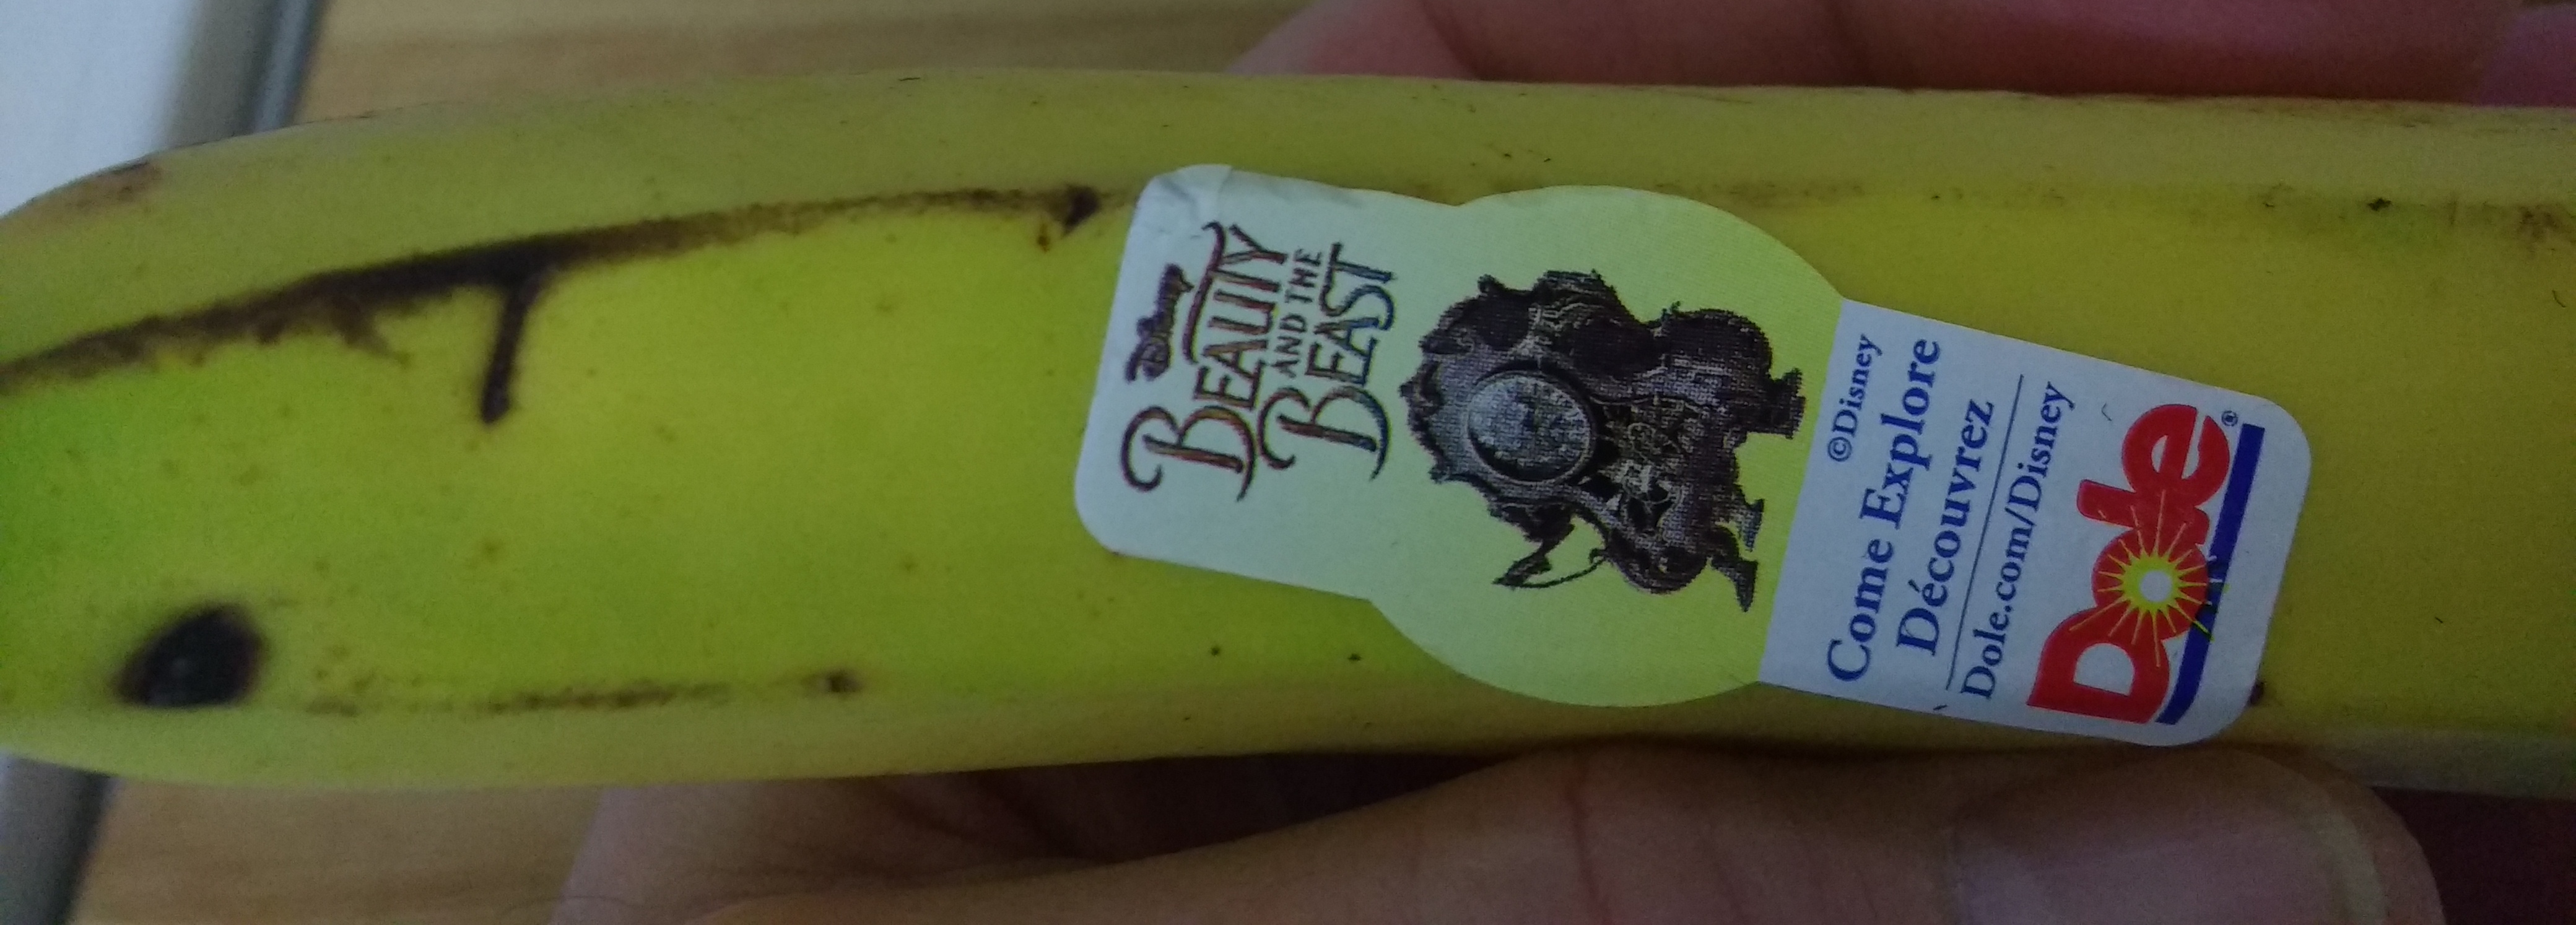 bananas 002.jpg